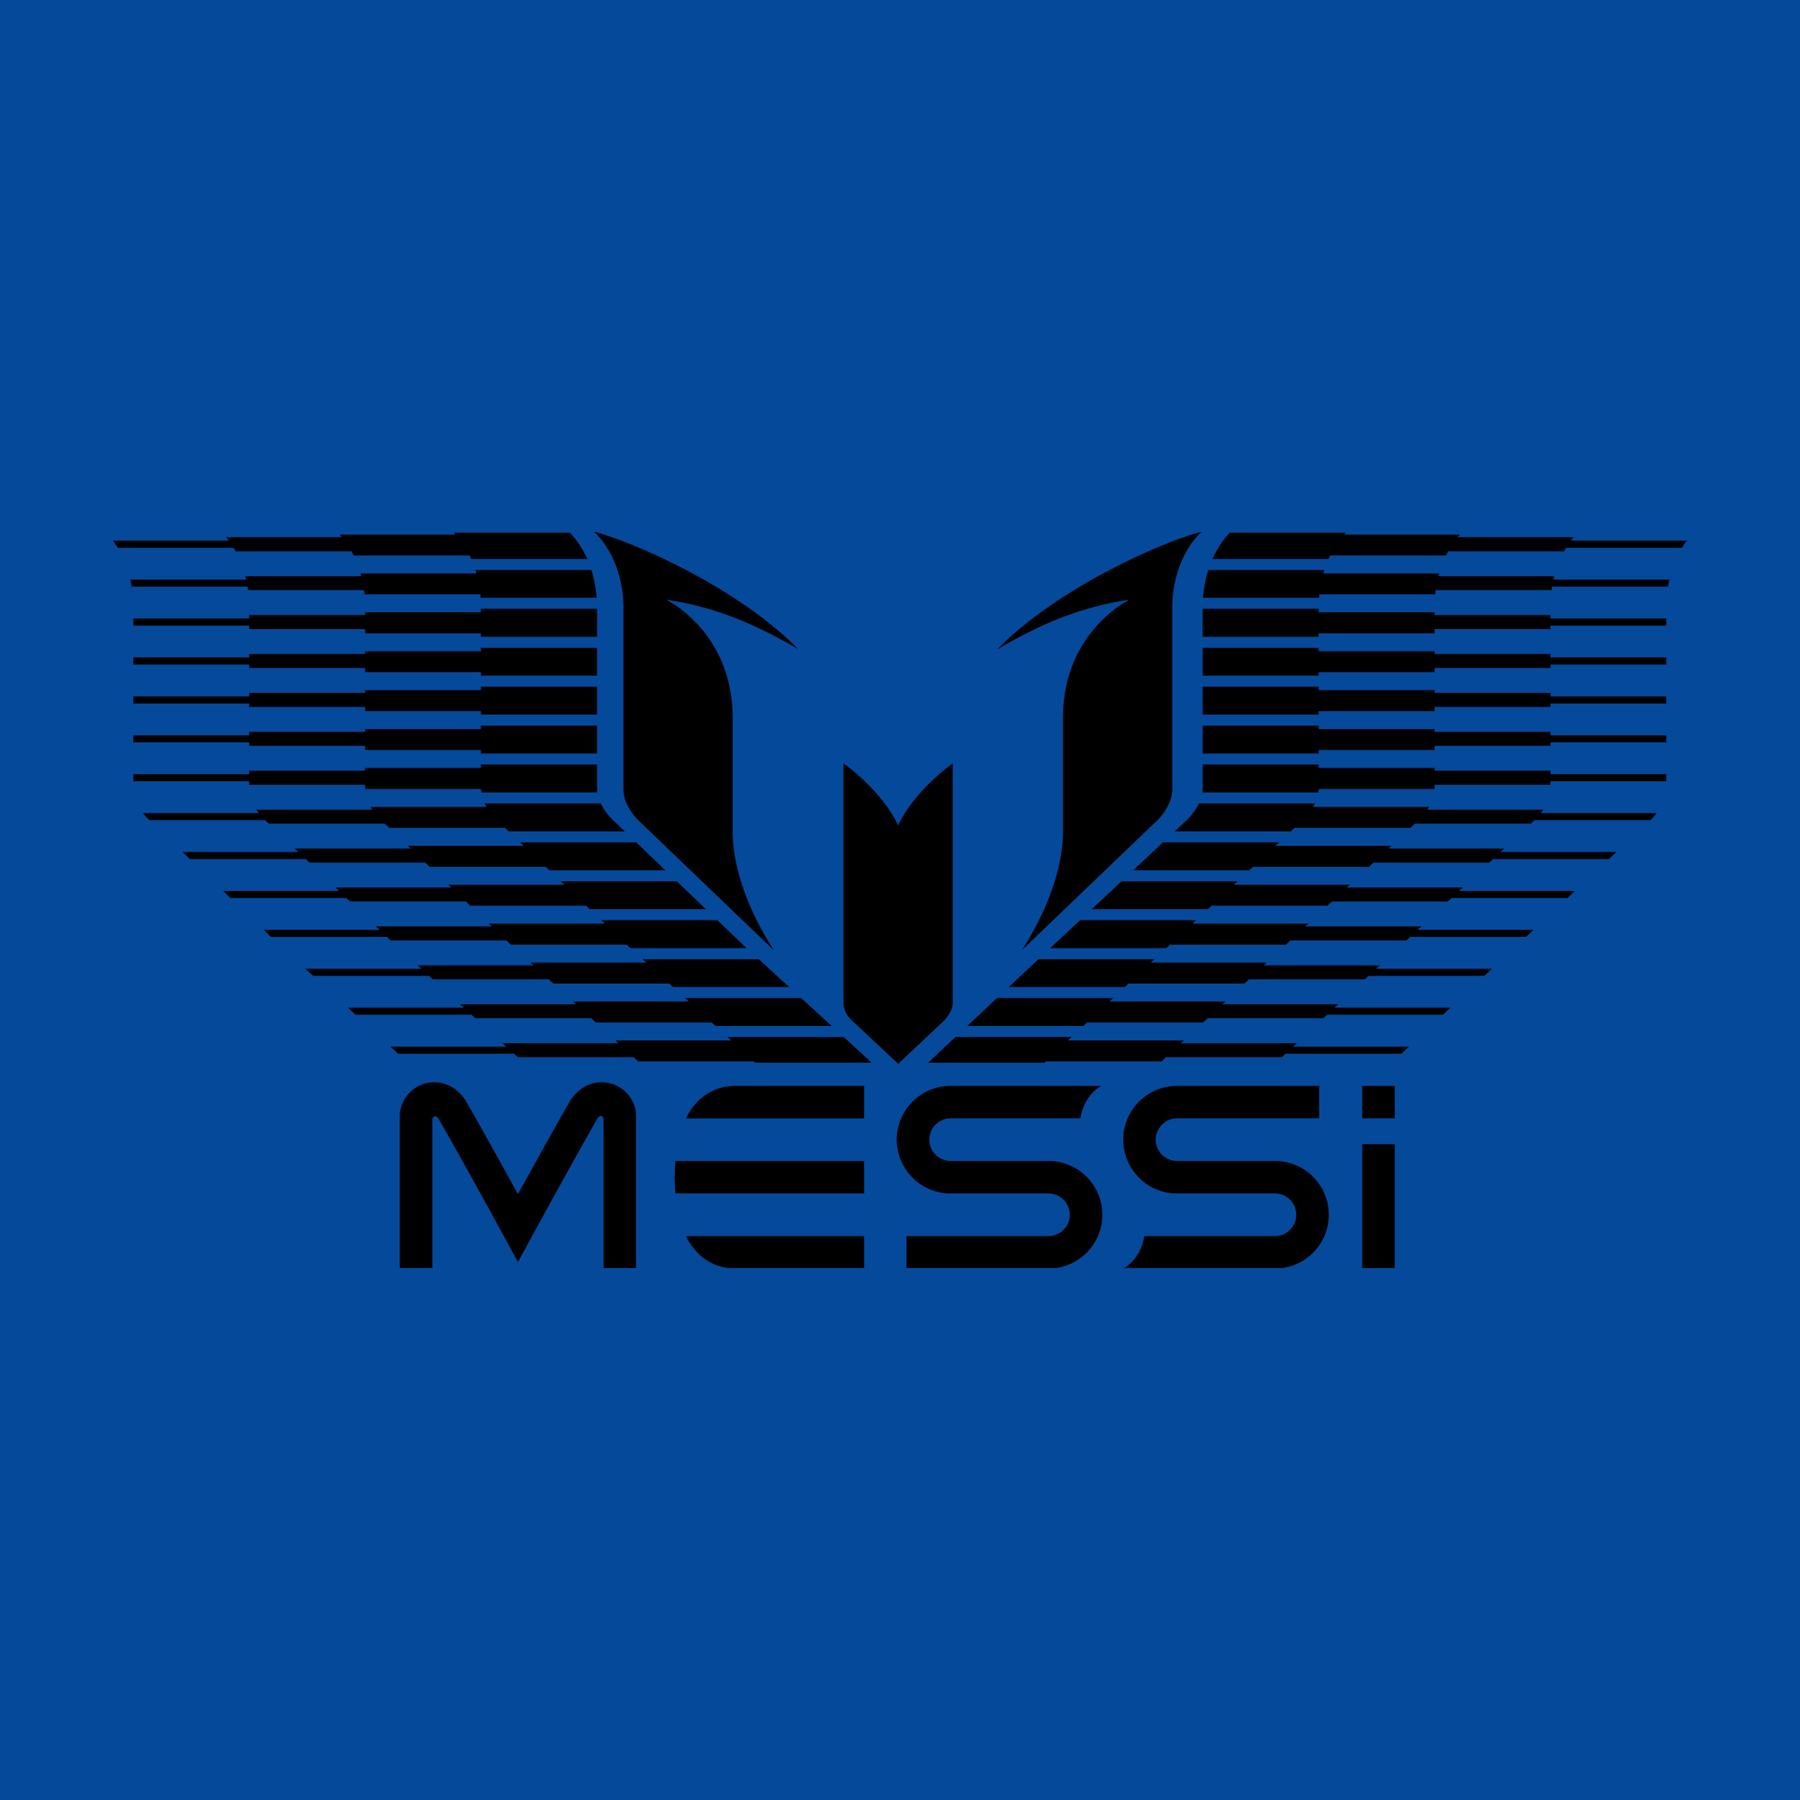 Lionel Messi Logo Transparent Background Free Download - PNG Images